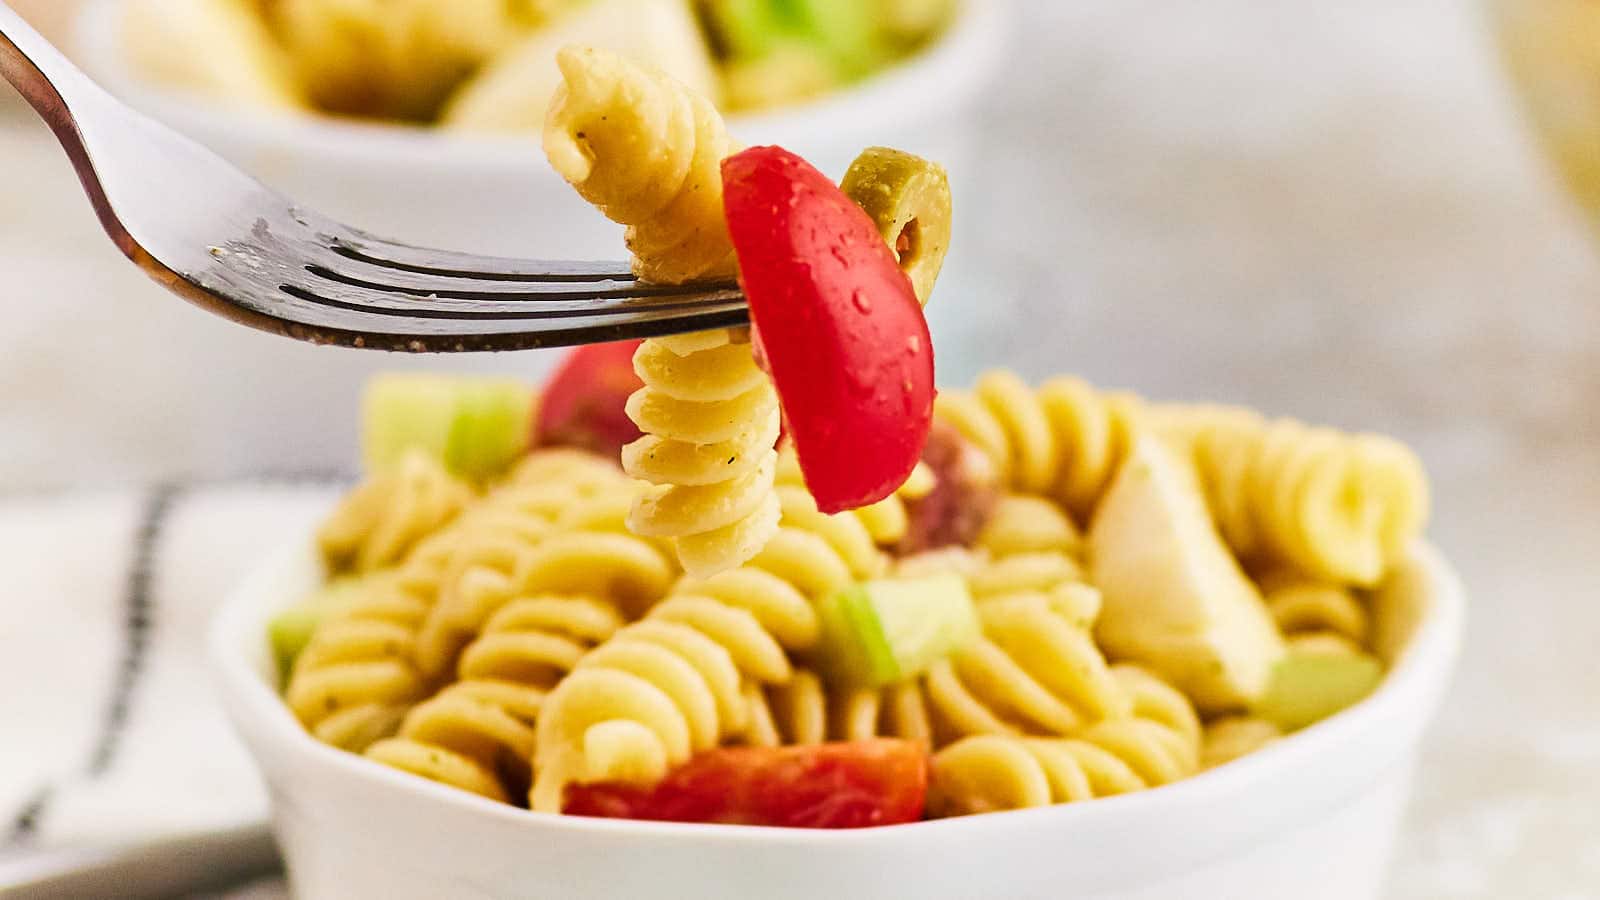 Italian Pasta Salad recipe by Cheerful Cook.